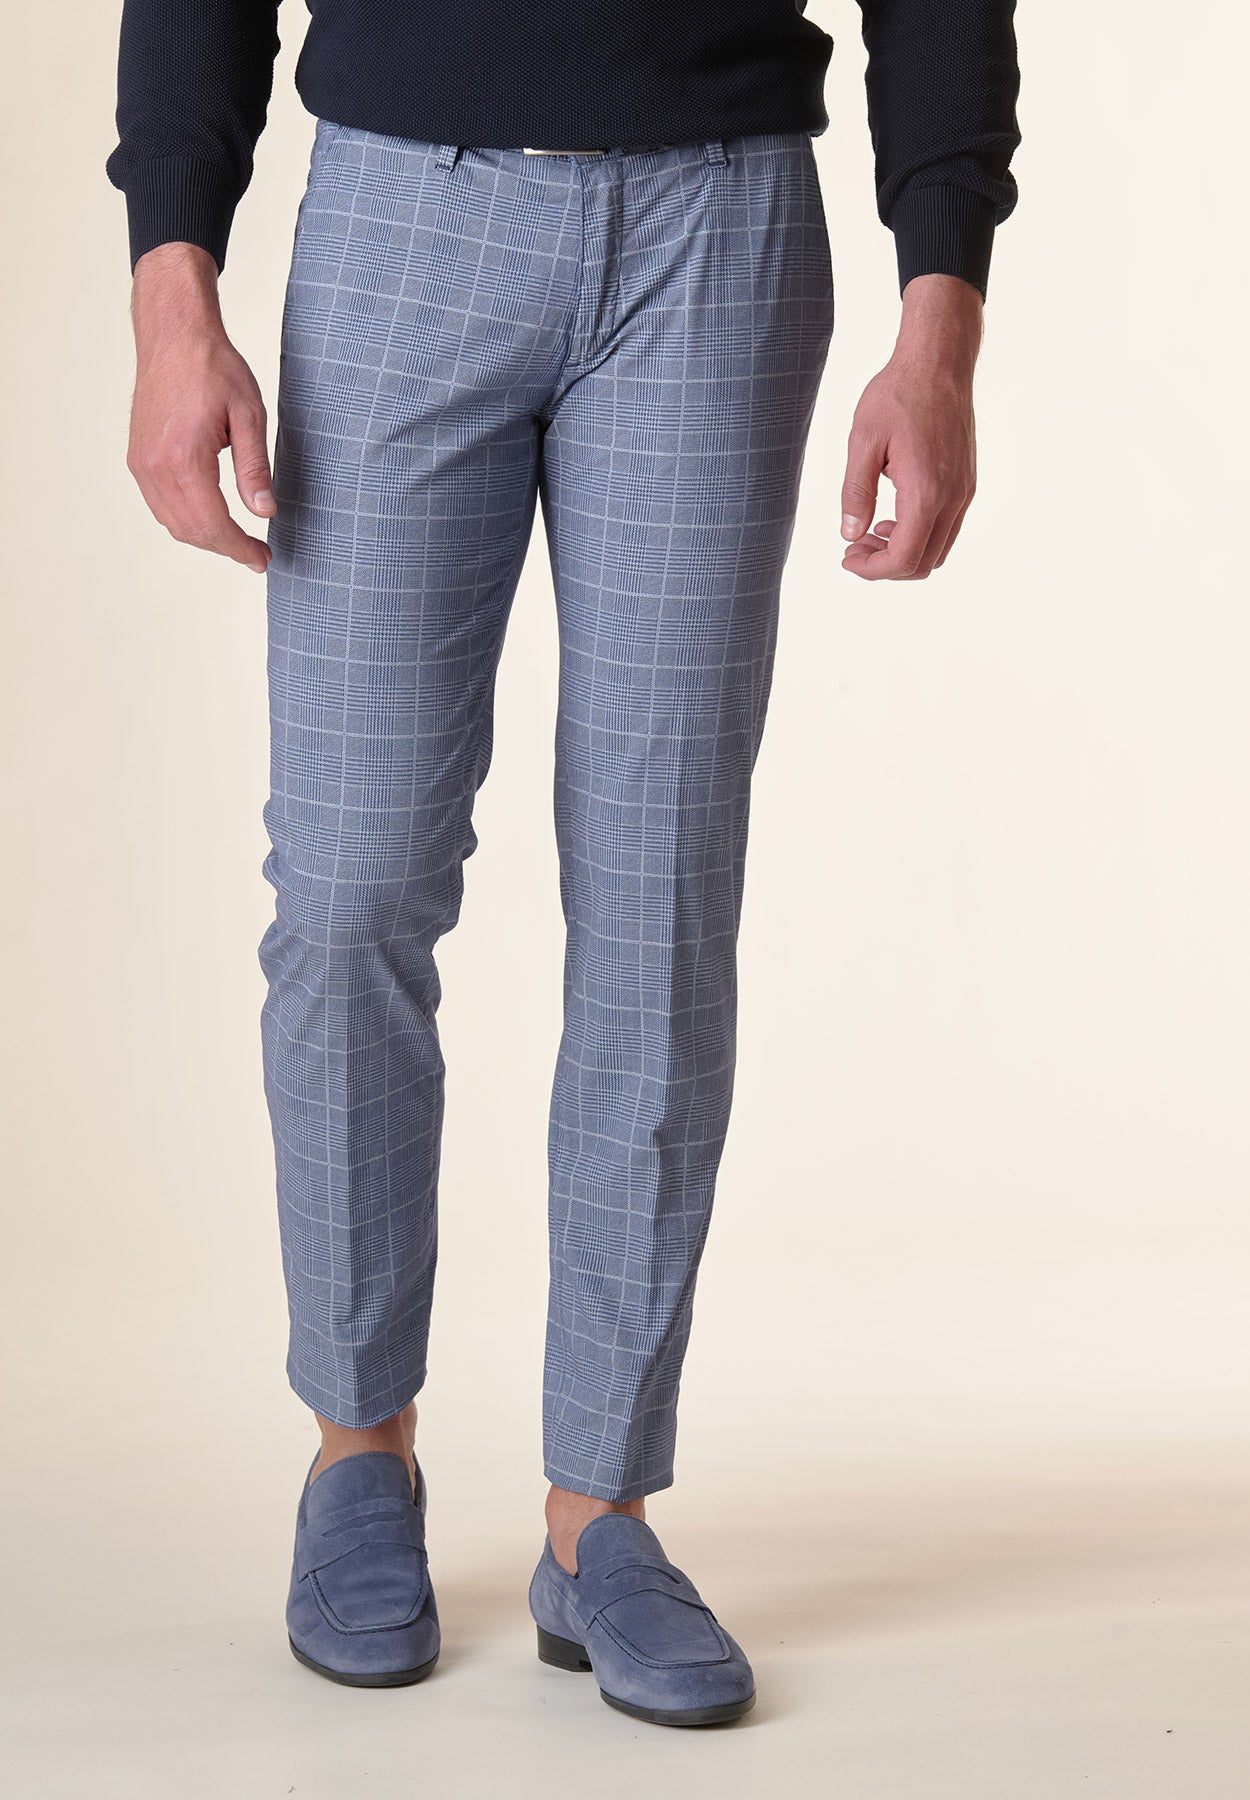 Indigo Welsh stretch cotton slim fit trousers